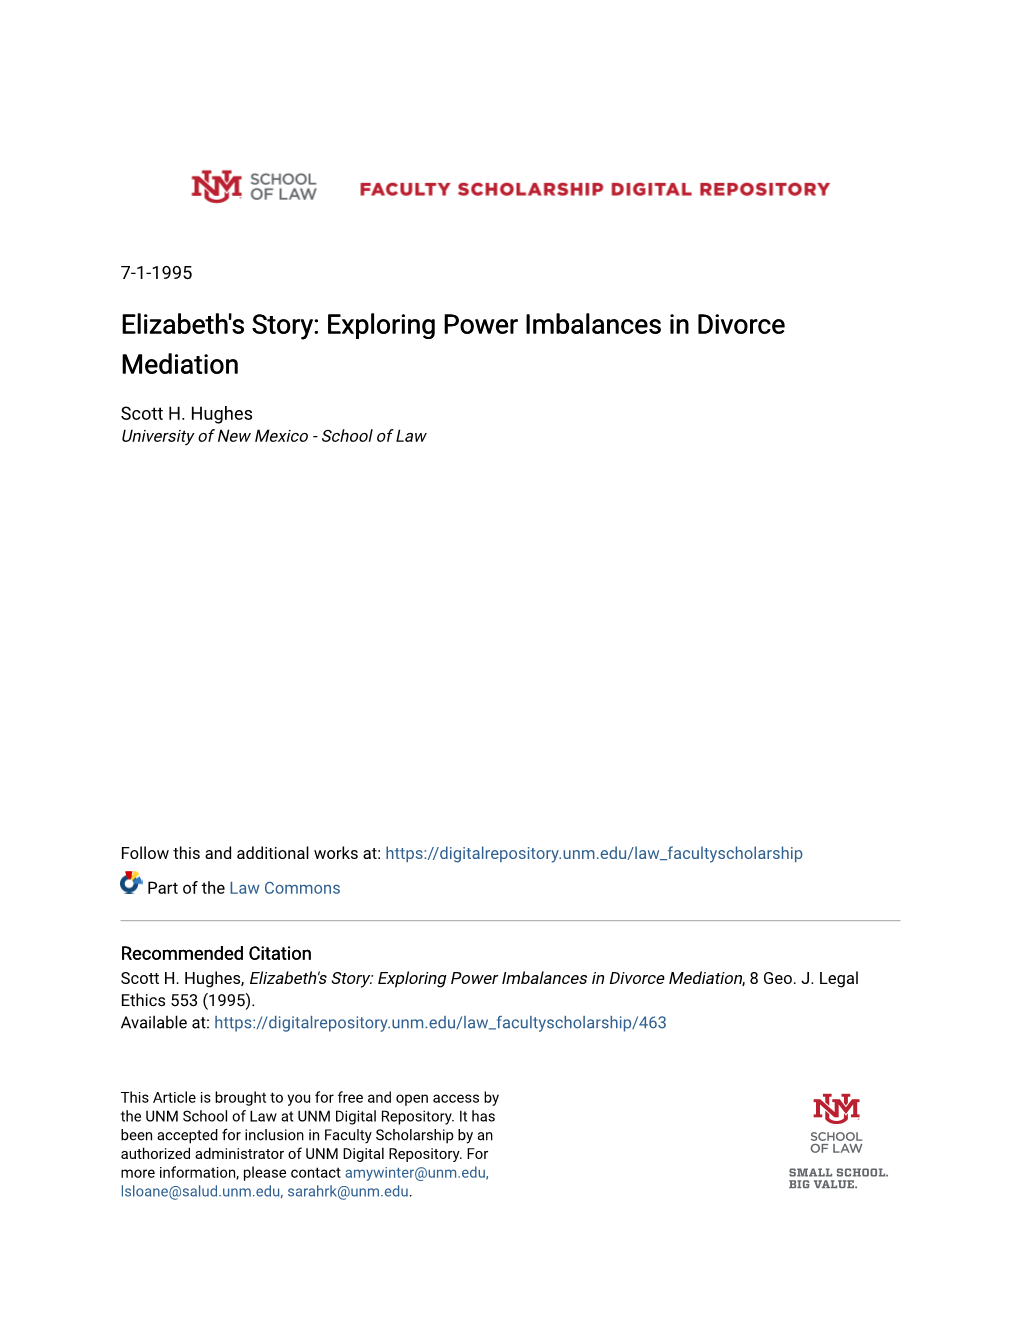 Elizabeth's Story: Exploring Power Imbalances in Divorce Mediation